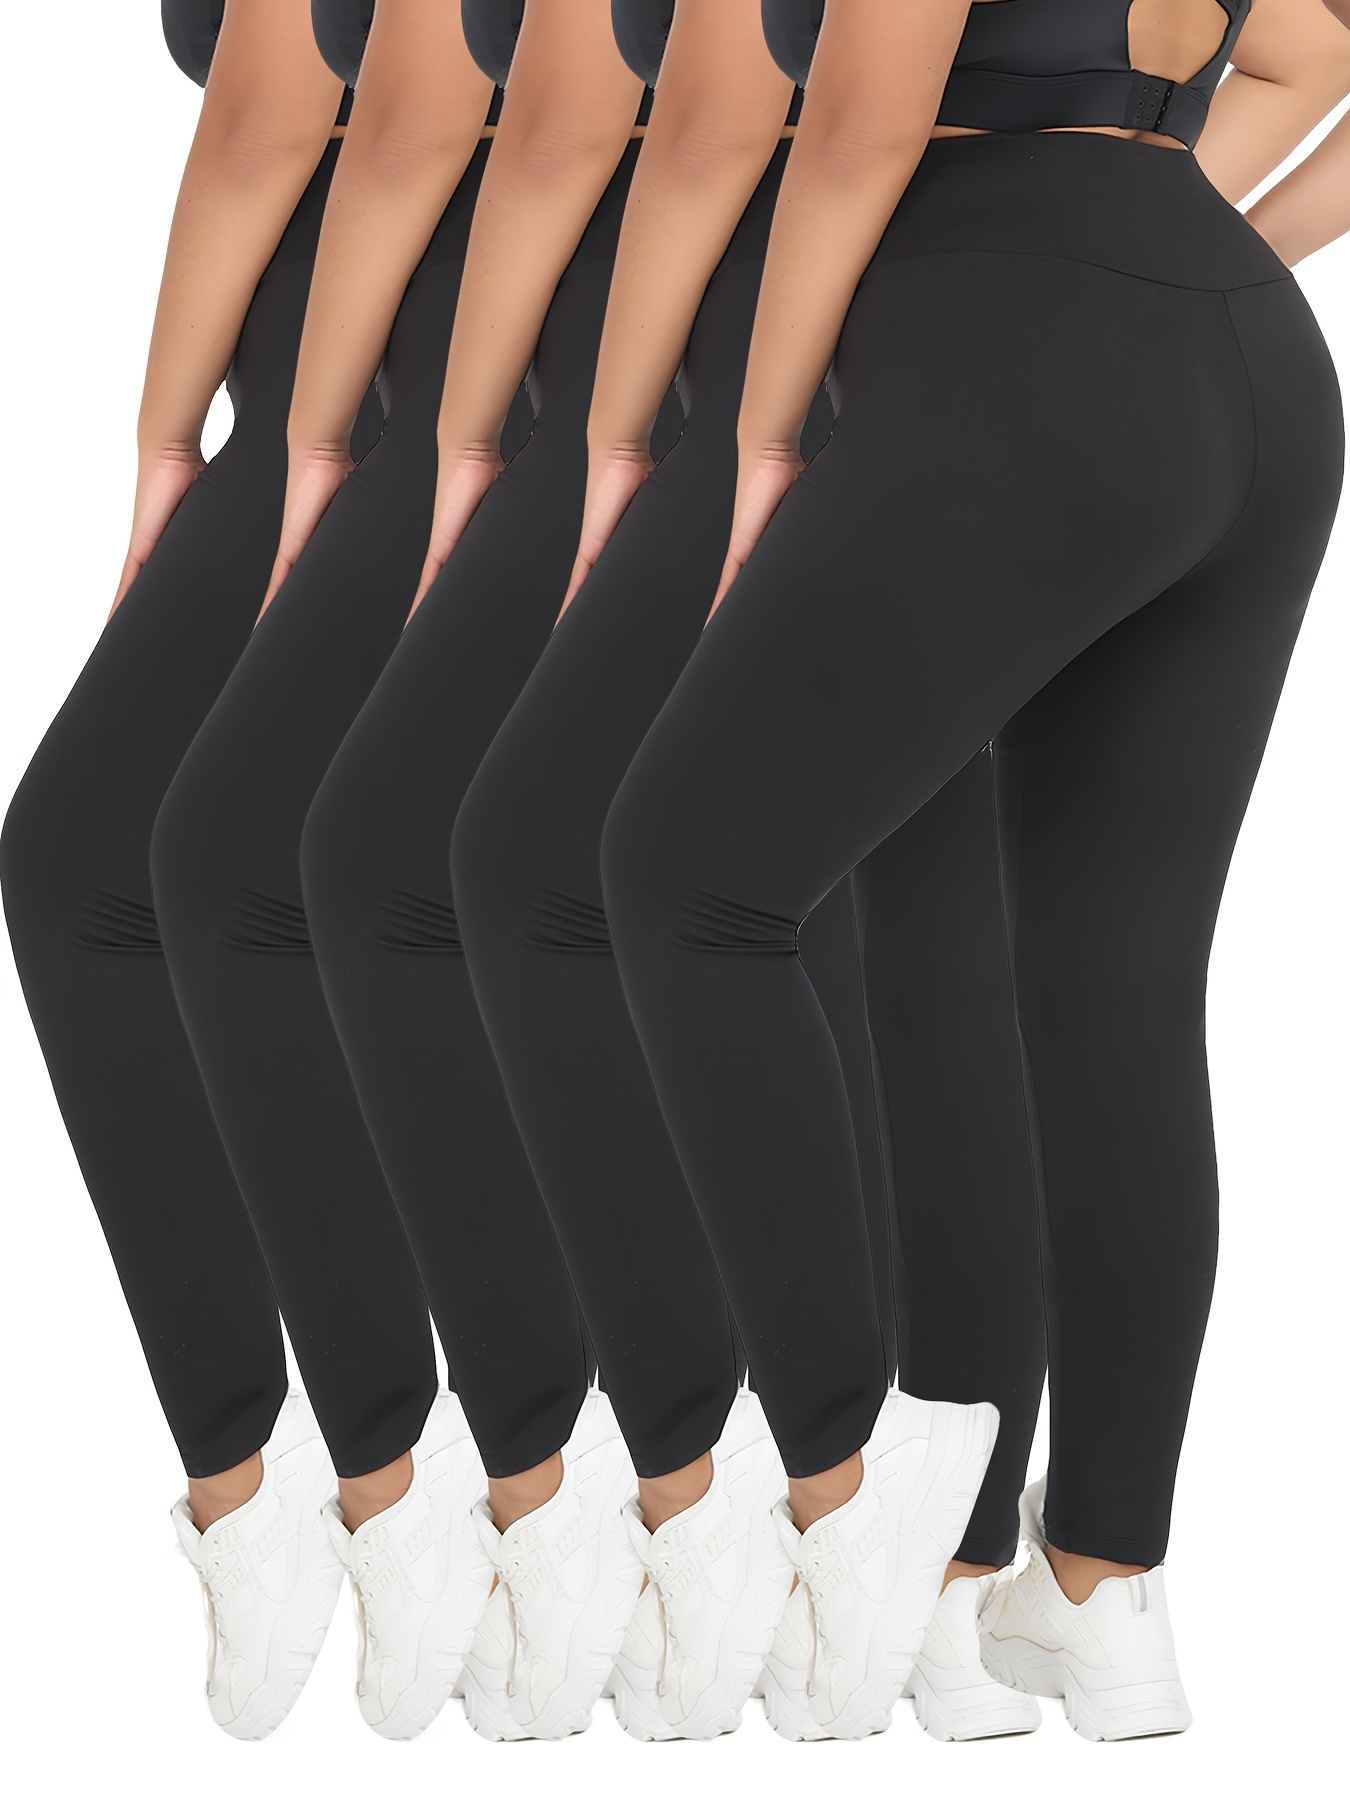 Plus Size 5pcs/Pack Women's High-Waist Pocket Yoga Pants, Soft And